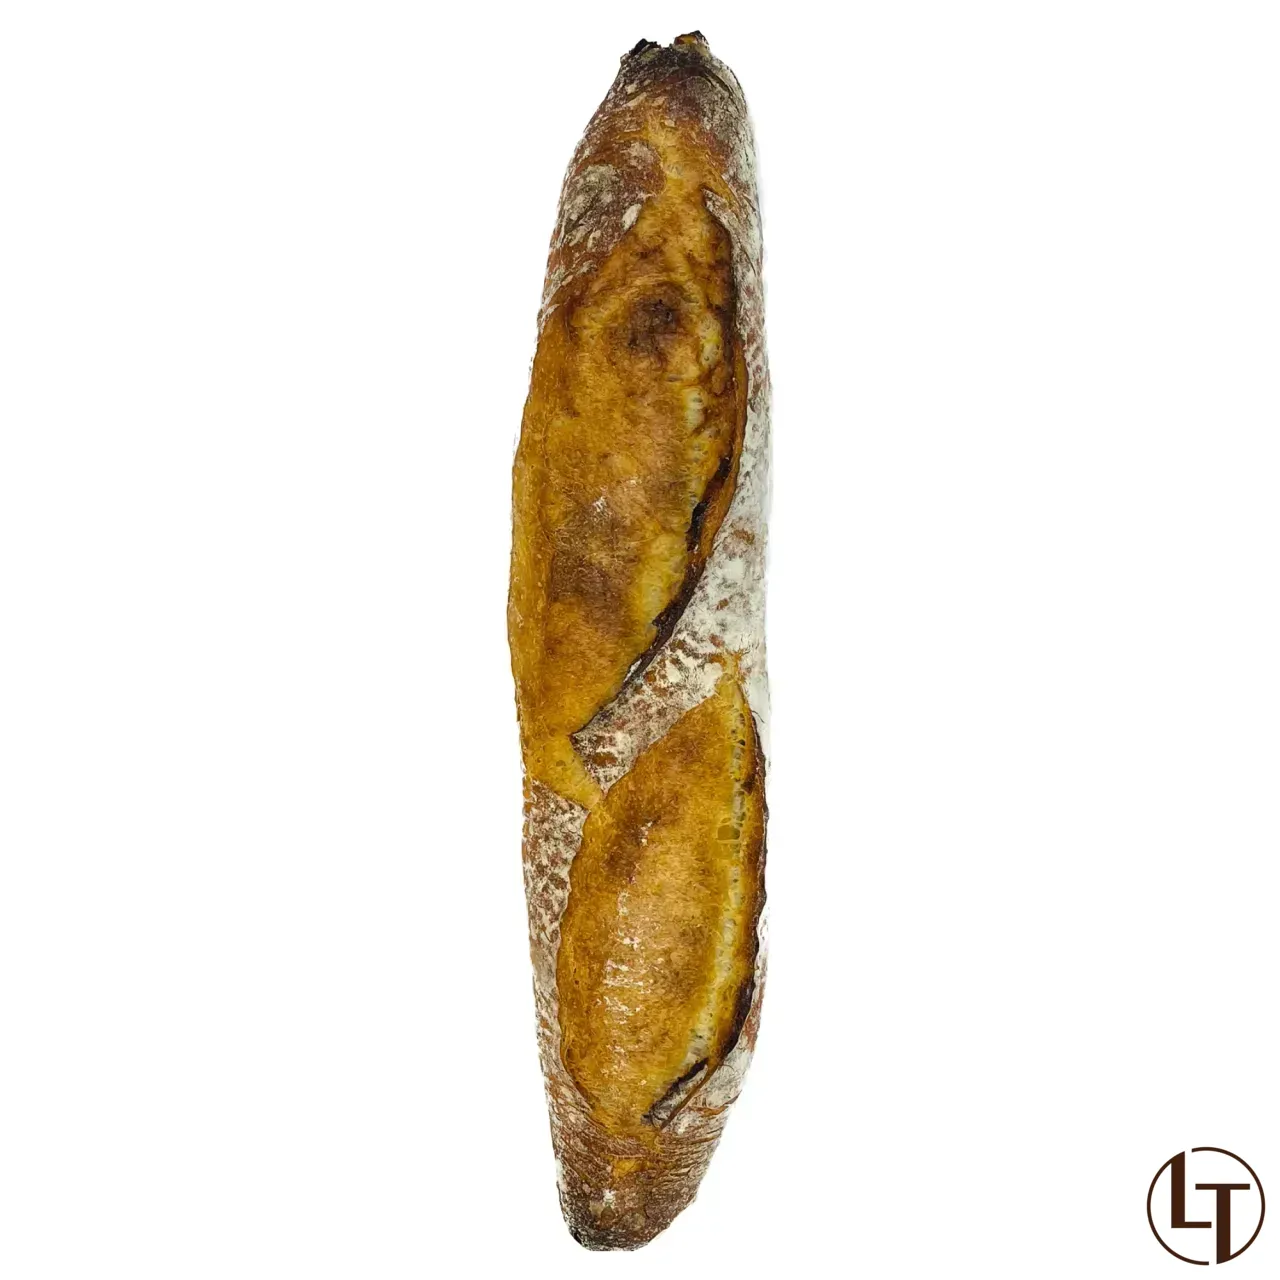 Grignette chorizo & poivron - La Talemelerie